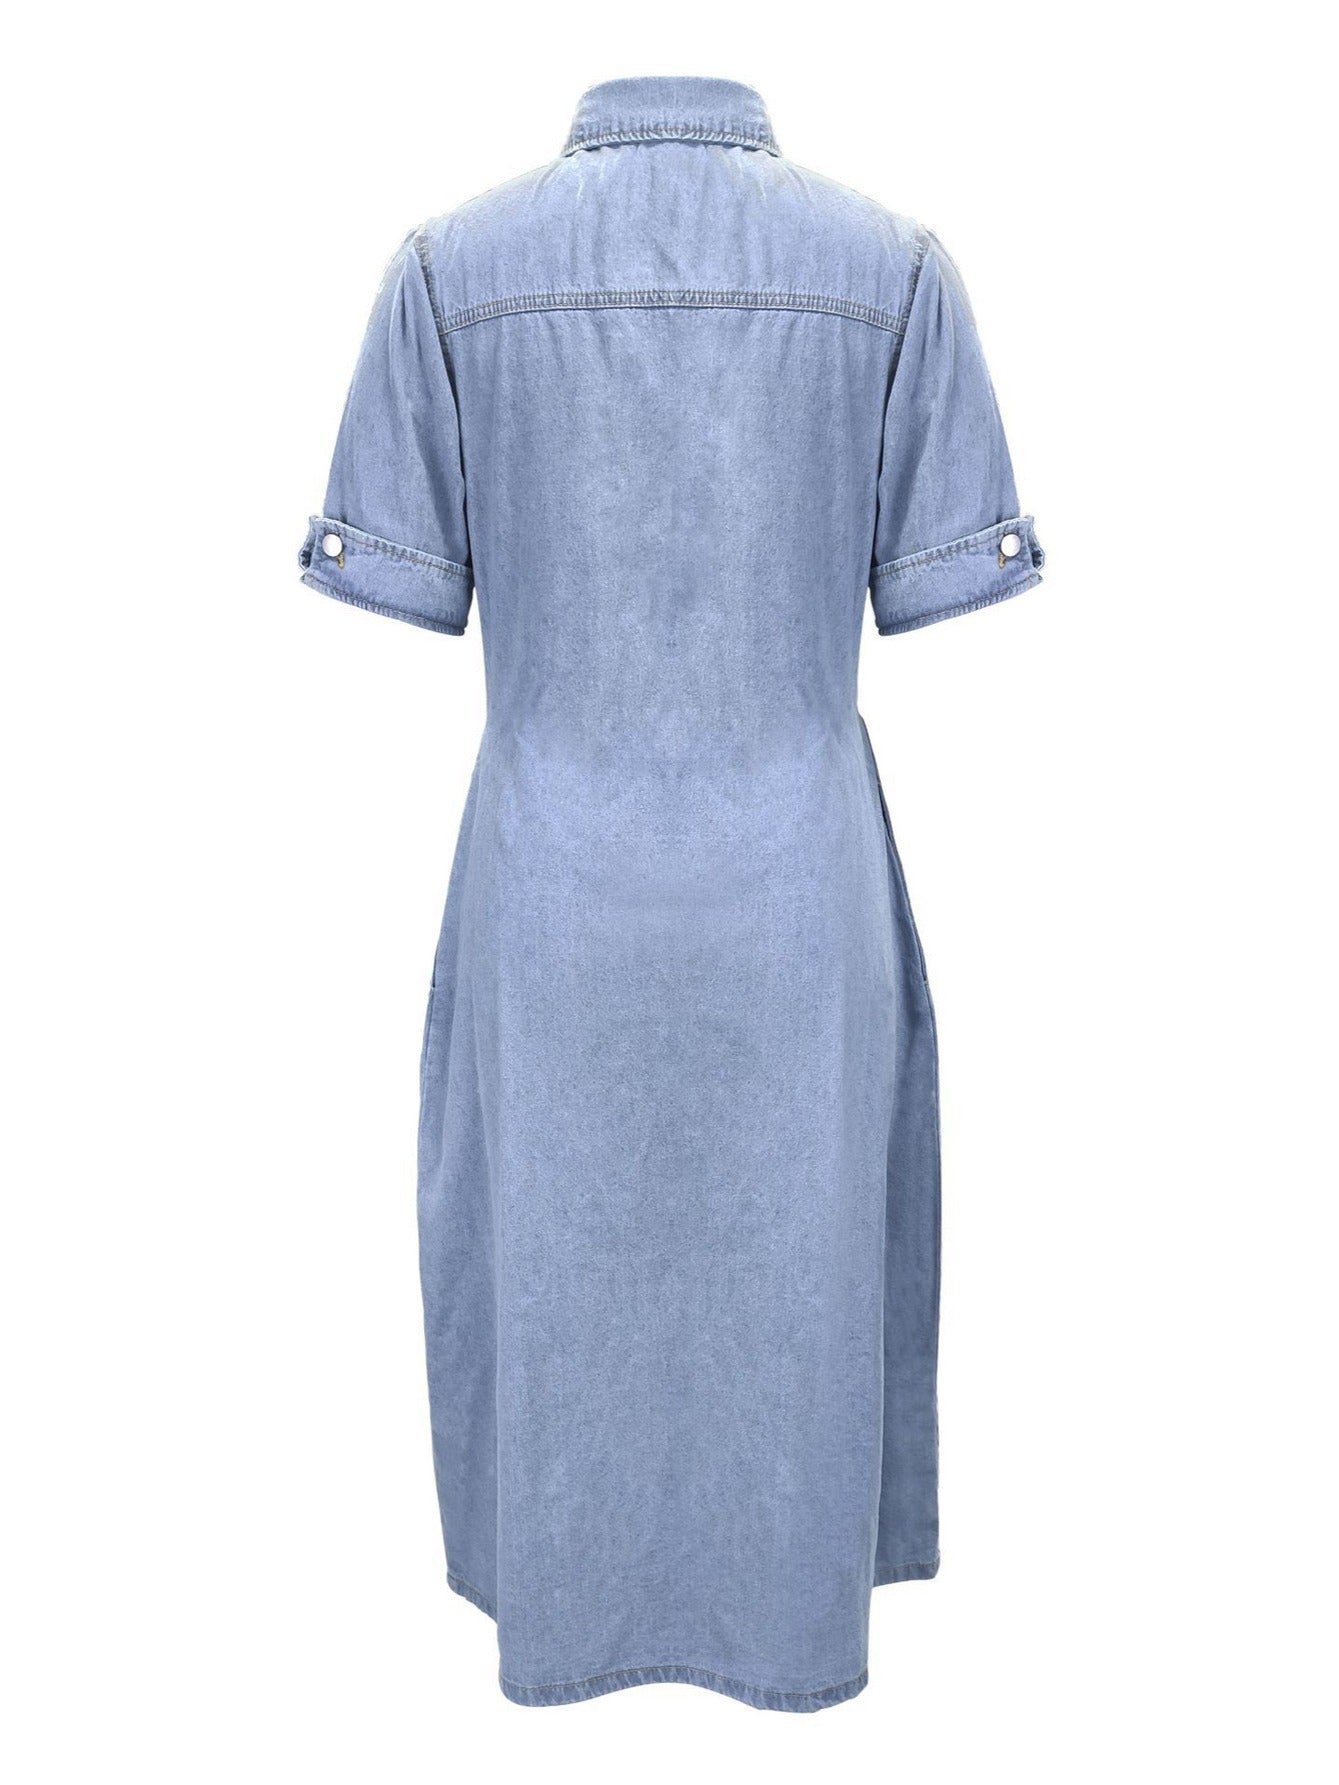 vlovelaw  A-Line Flap Pockets Denim Dress, Rolled Sleeve Button Up V Neck Dress, Casual Lapel Denim Long Dress, Women's Denim Dress & Clothing